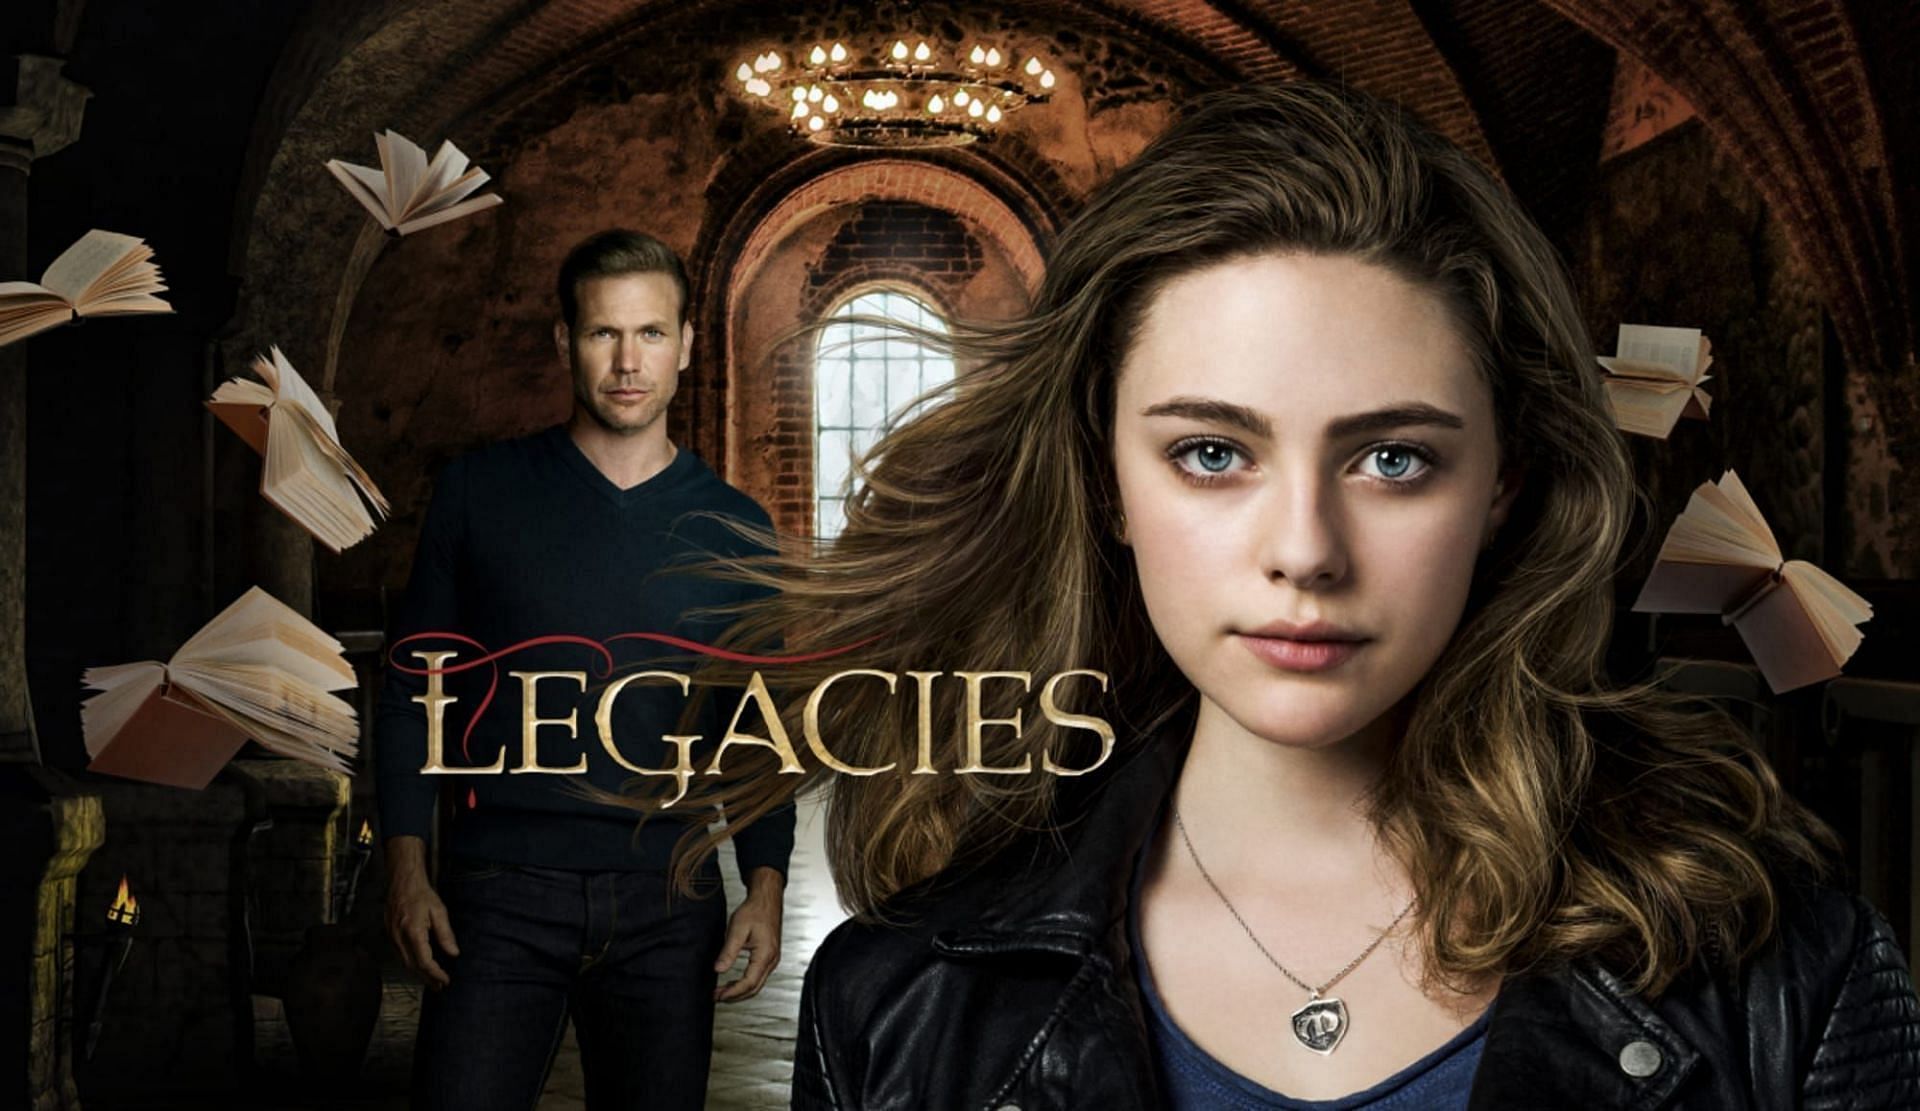 Legacies (Image via The CW)